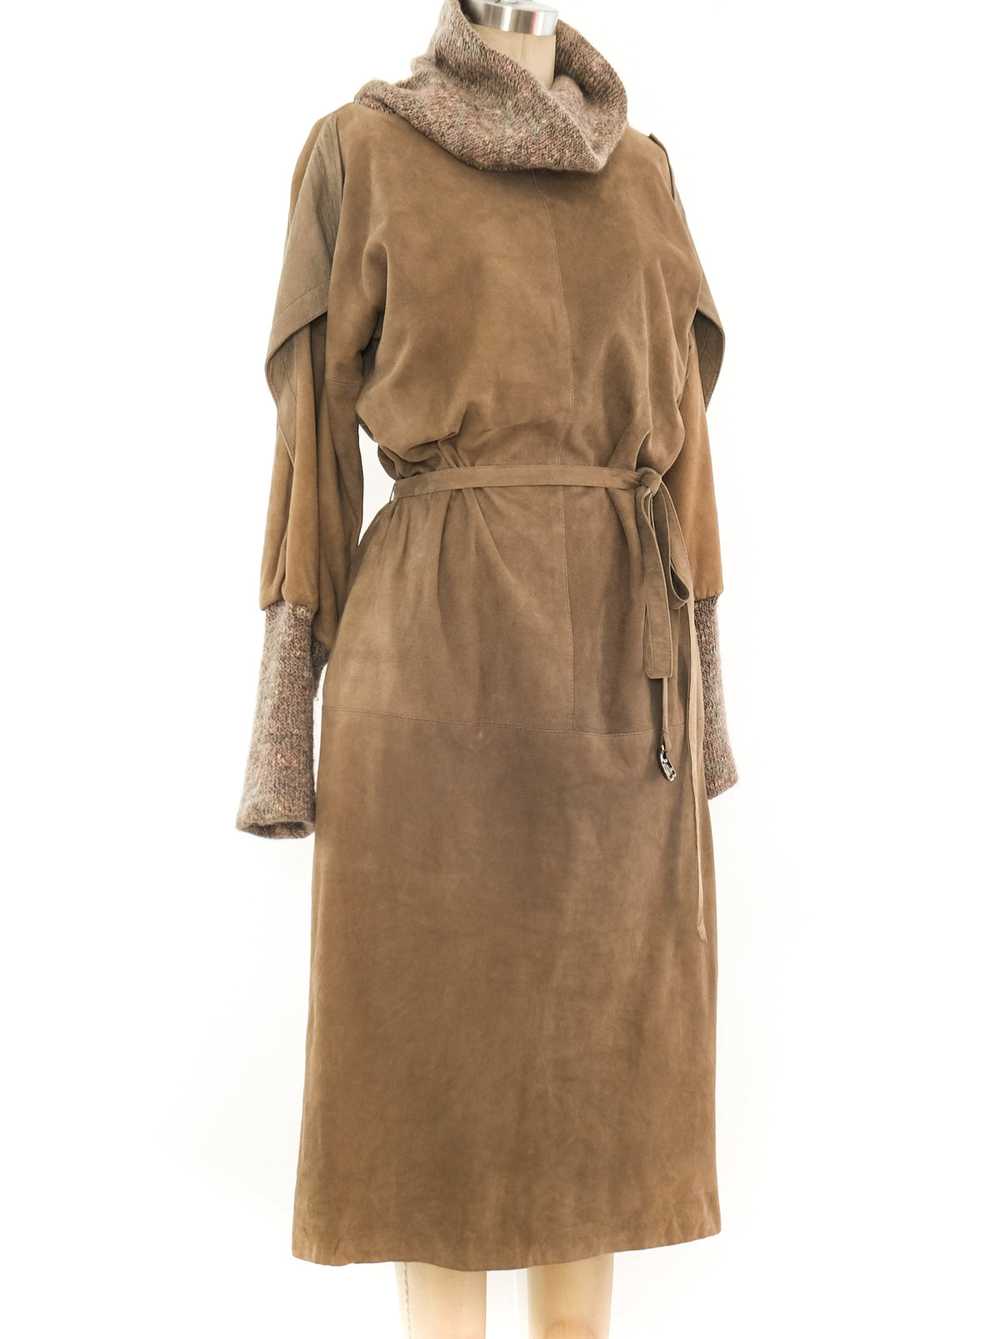 1980's Knit Trimmed Suede Dress - image 2